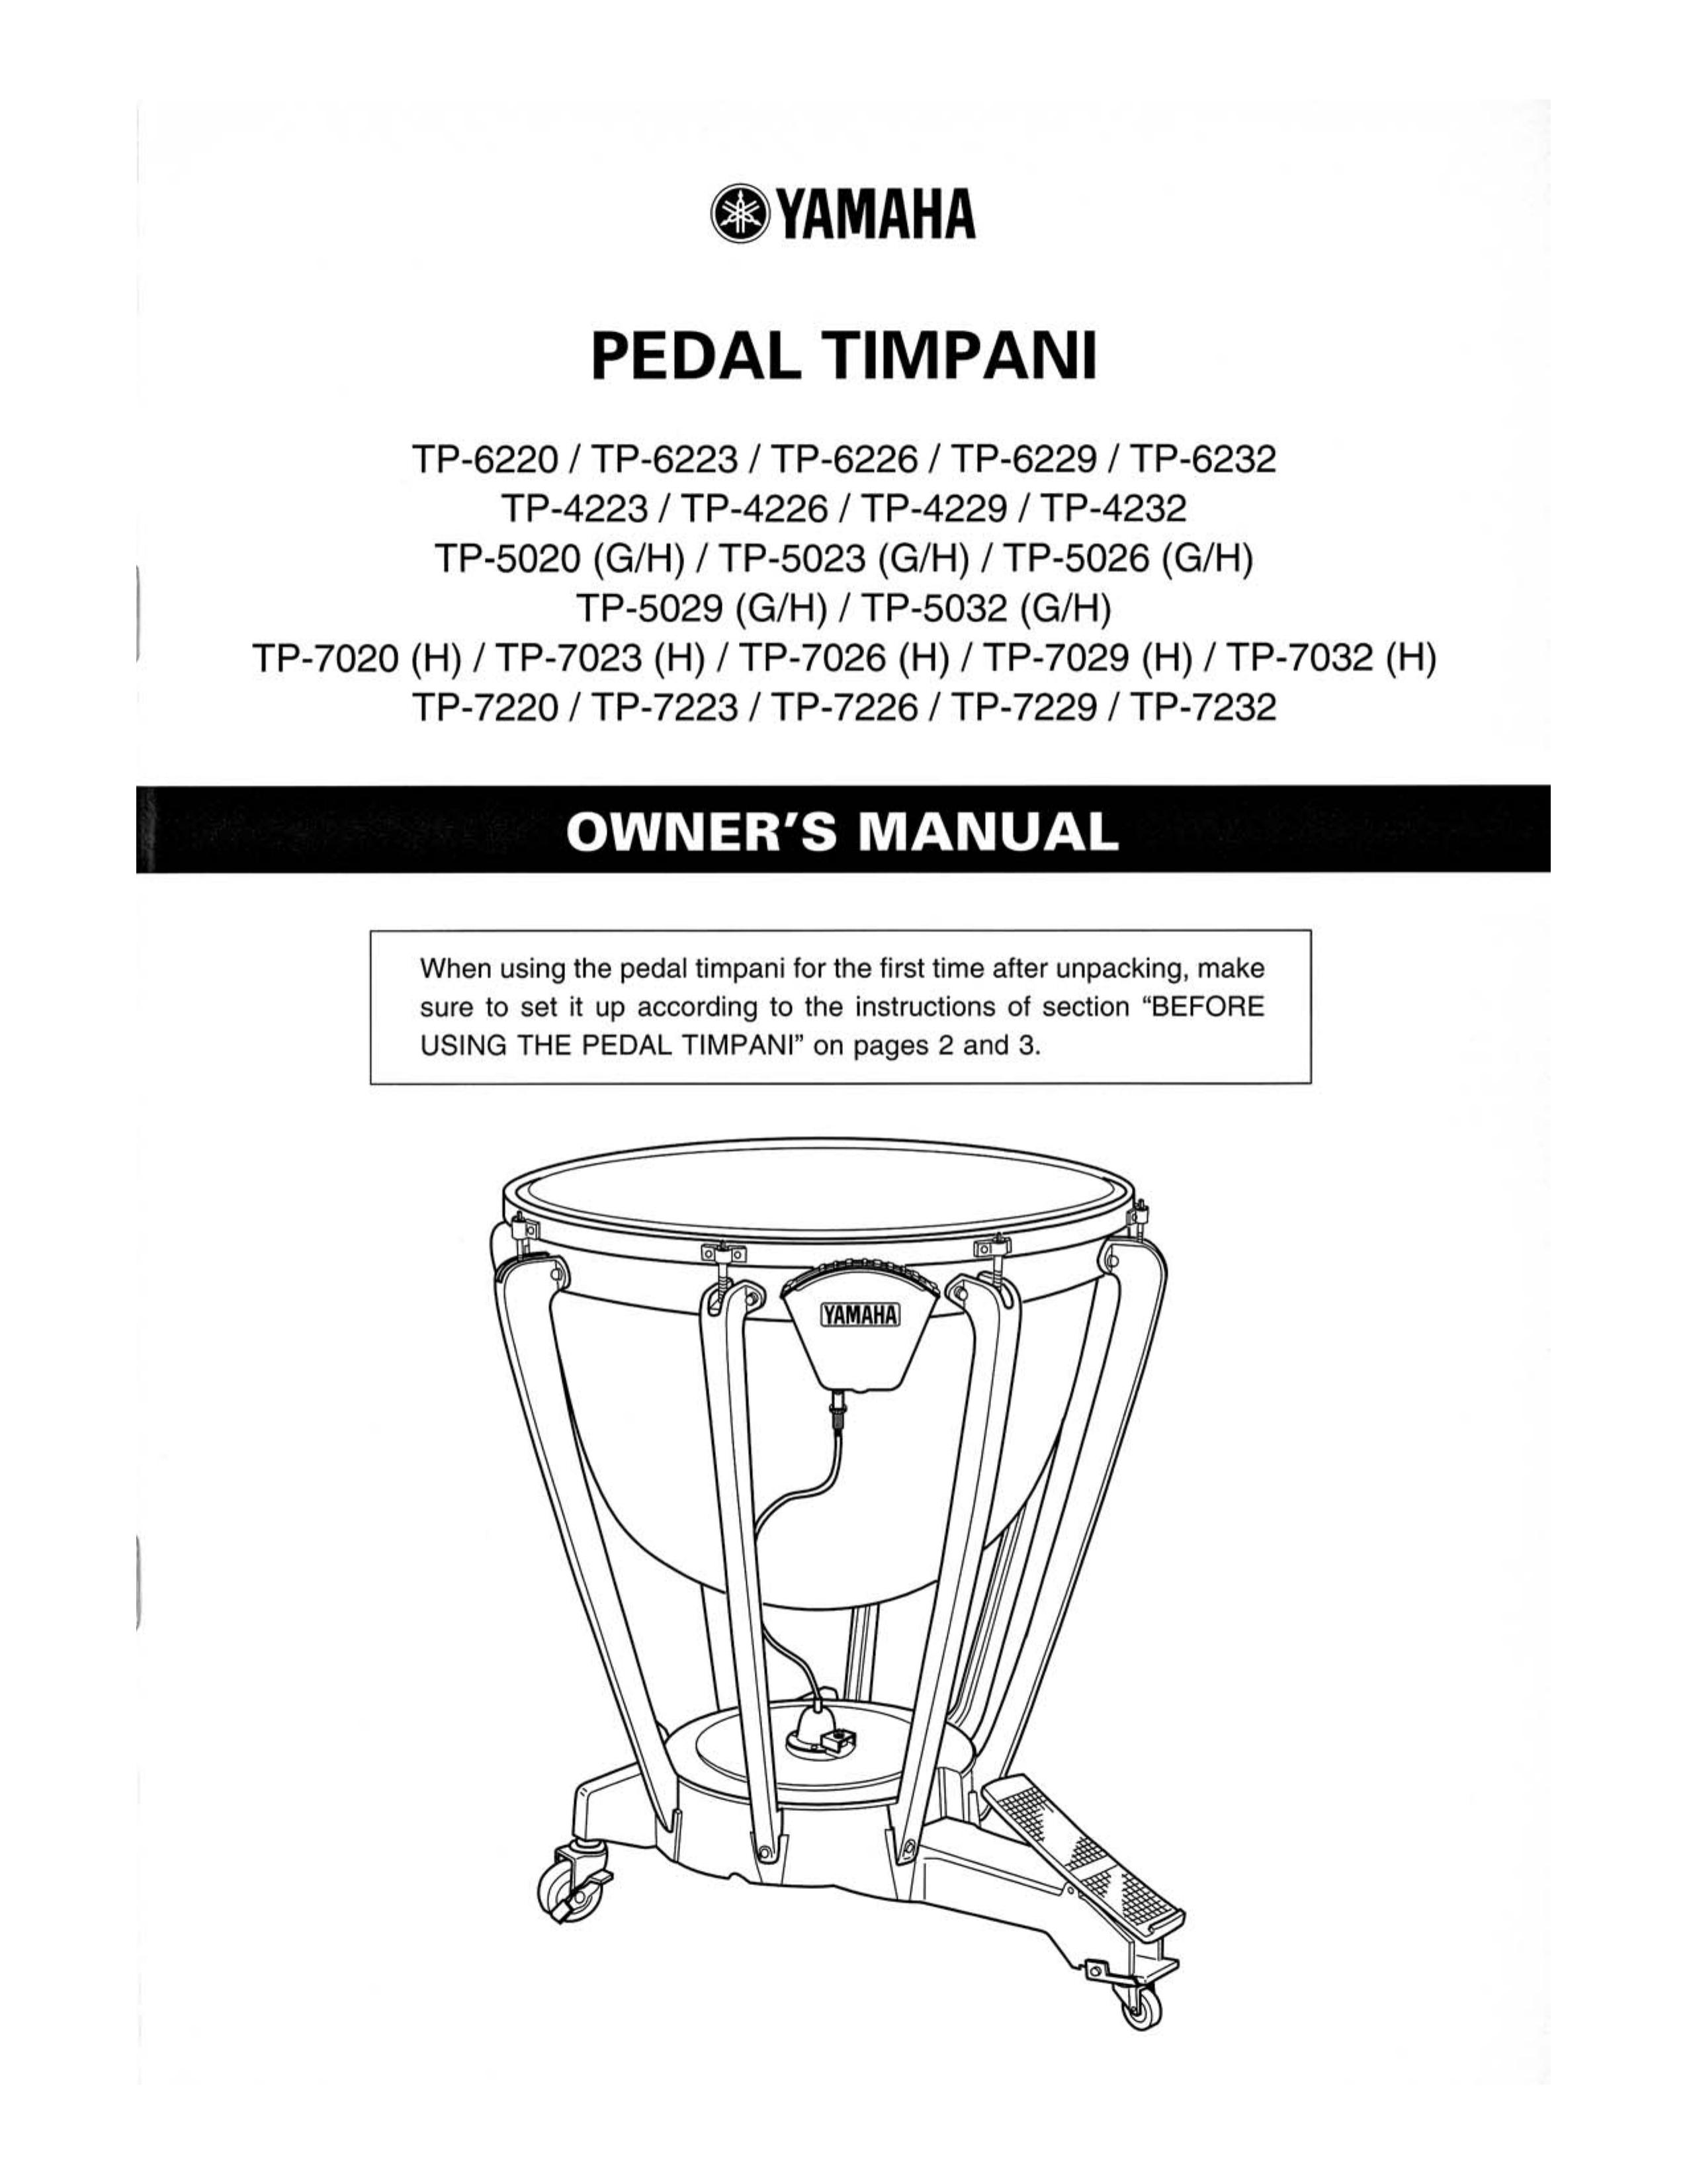 Yamaha TP-5032 Music Pedal User Manual